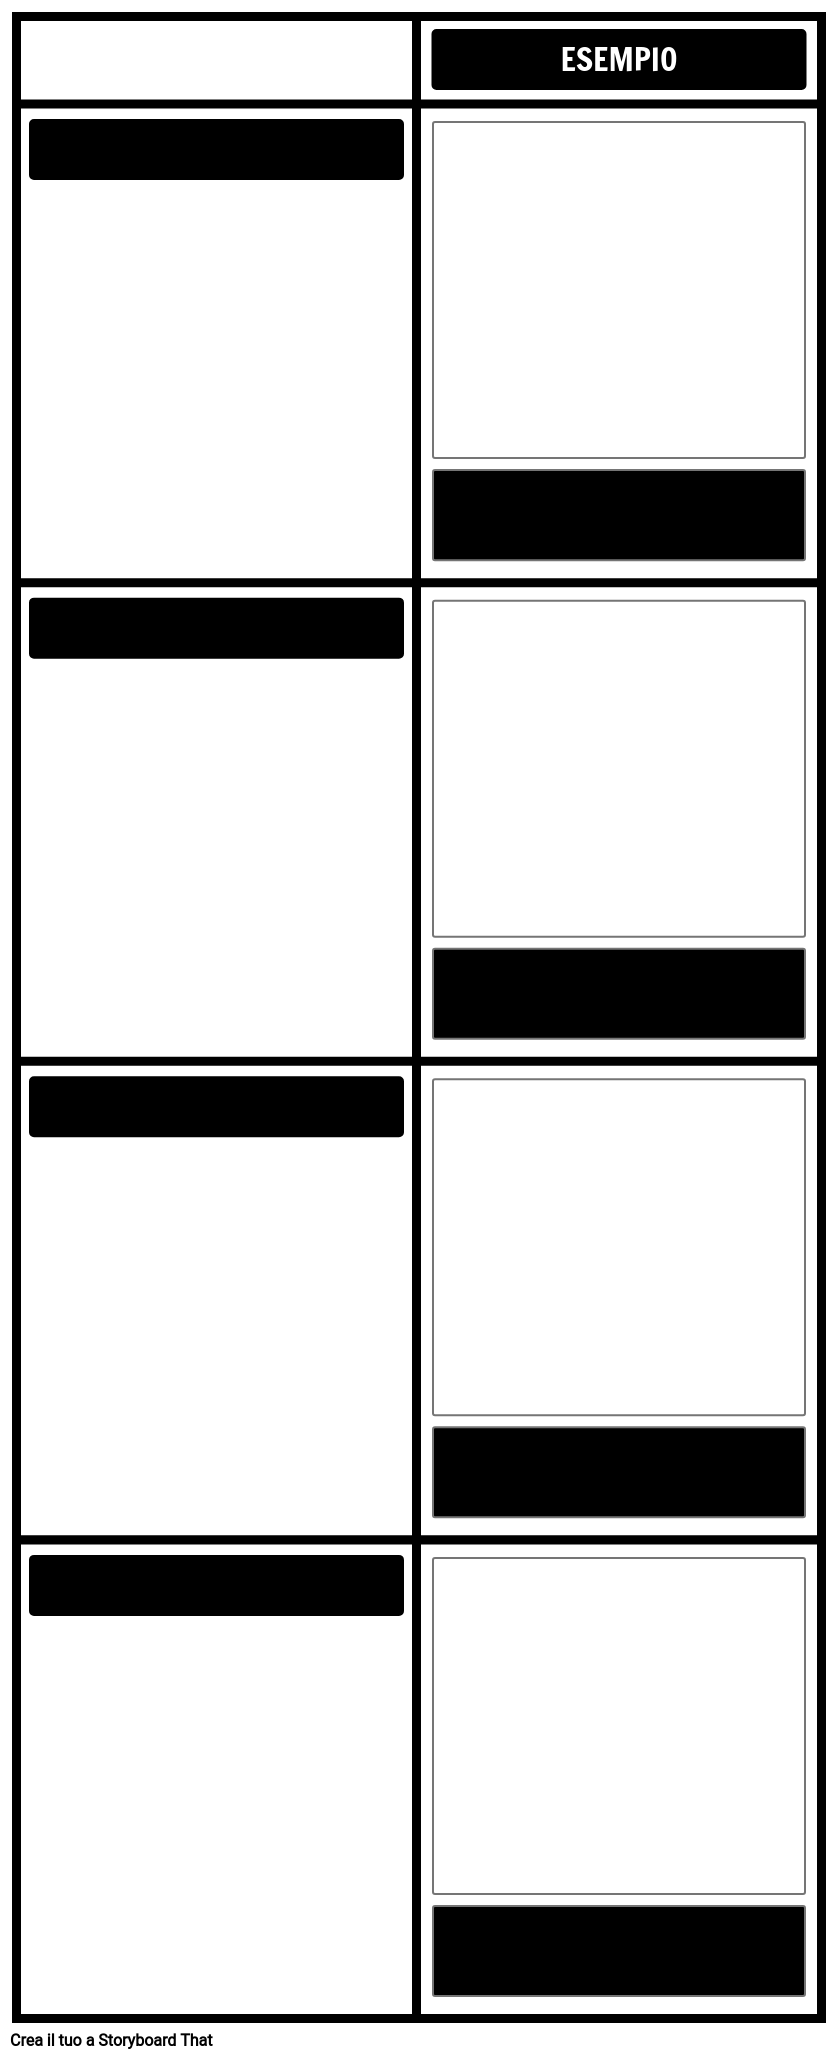 modello-di-temi-simboli-e-motivi-kuvak-sikirjoitus-by-it-examples